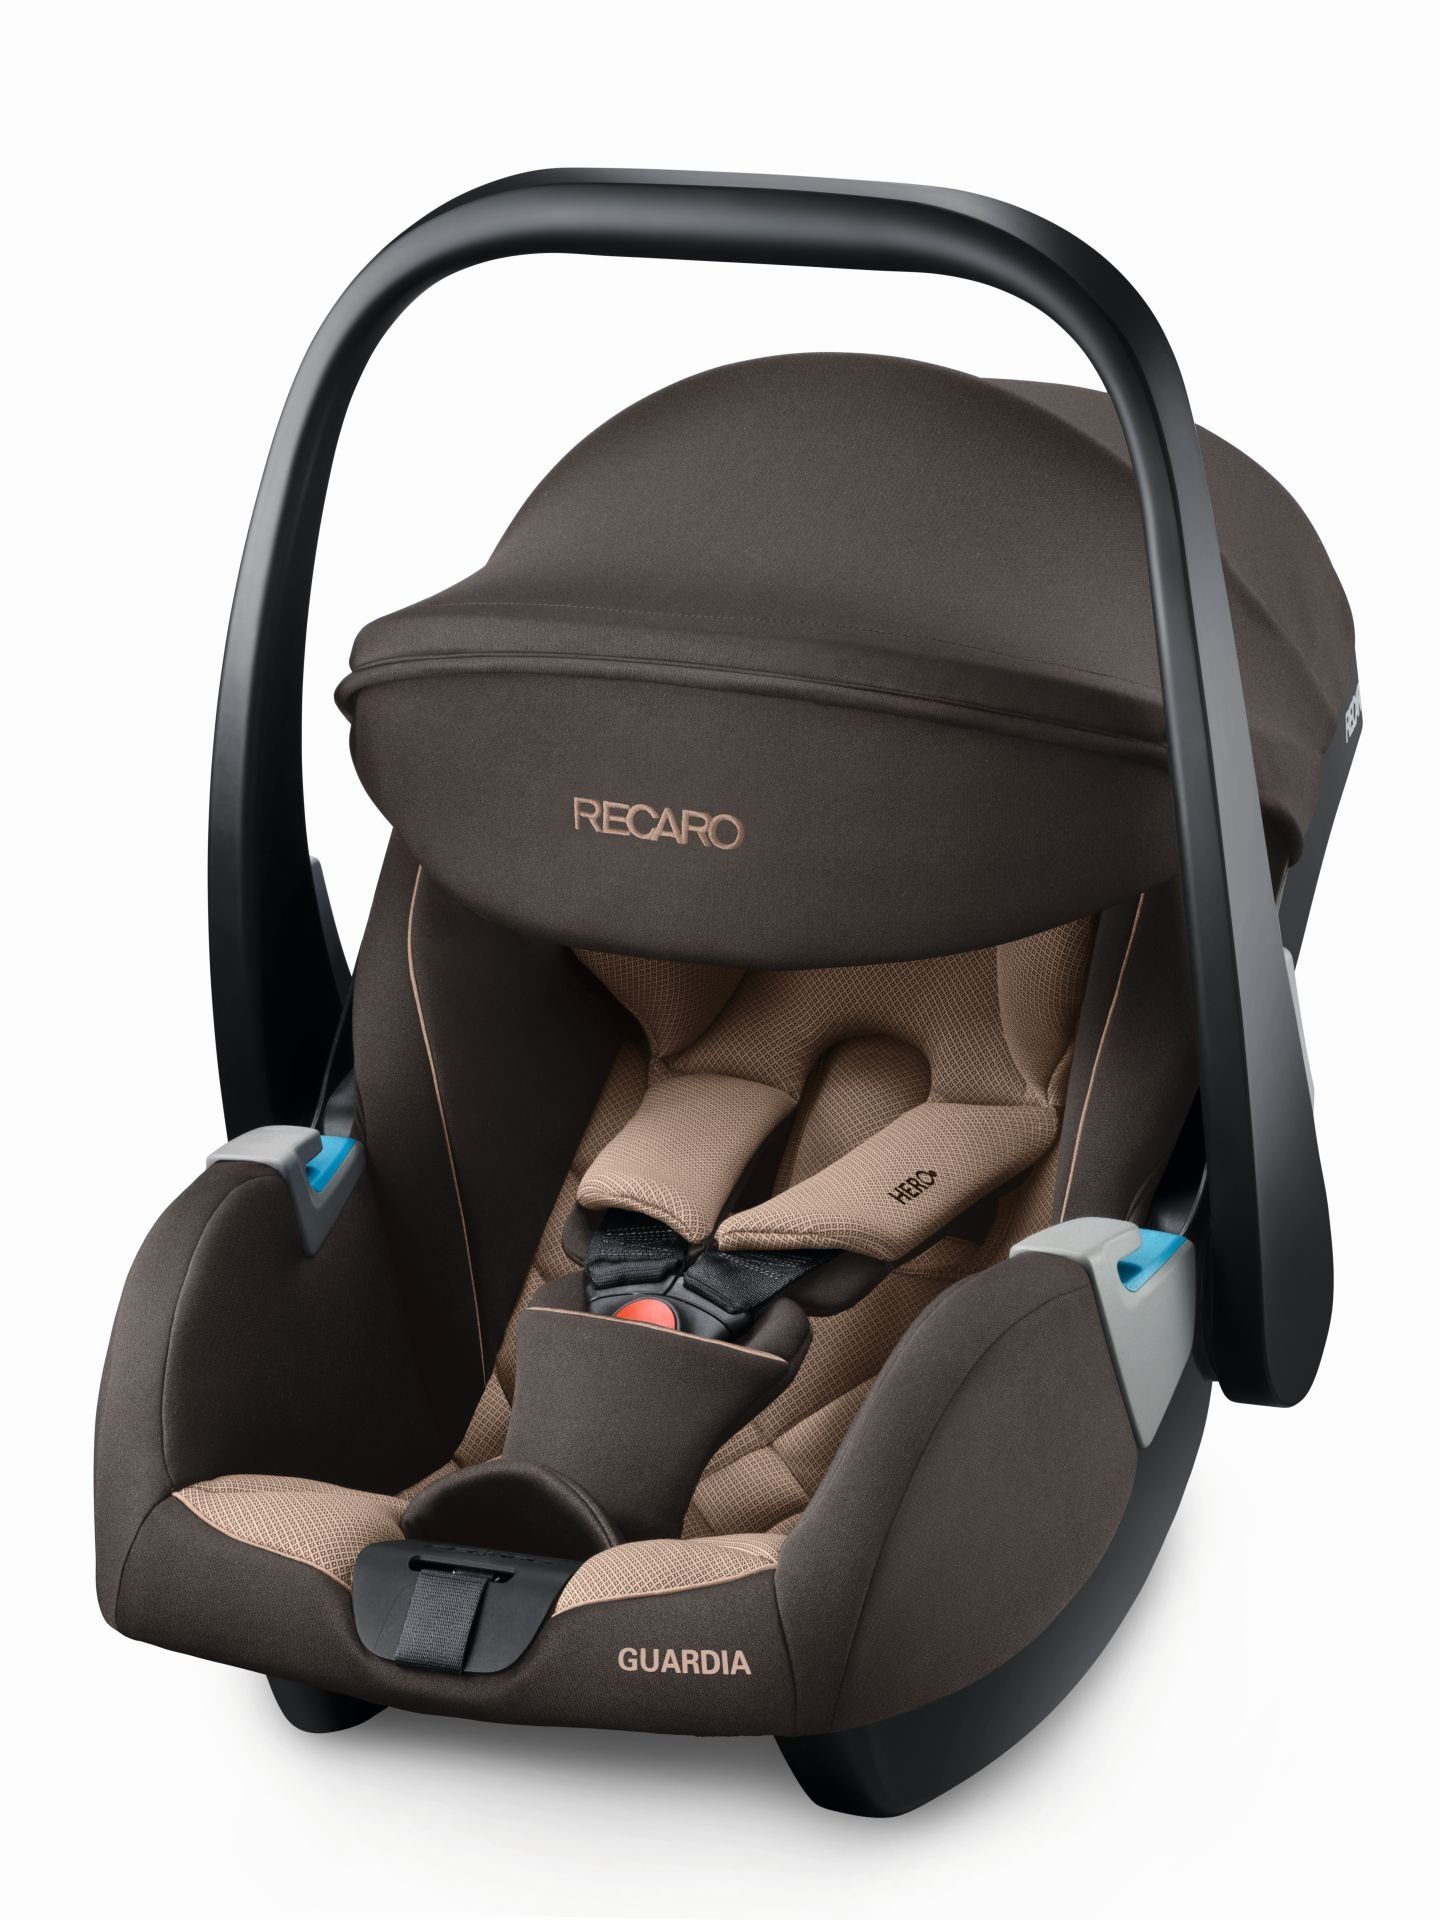 RECARO Autokindersitz Recaro Guardia rot Babyschale/Kindersitz